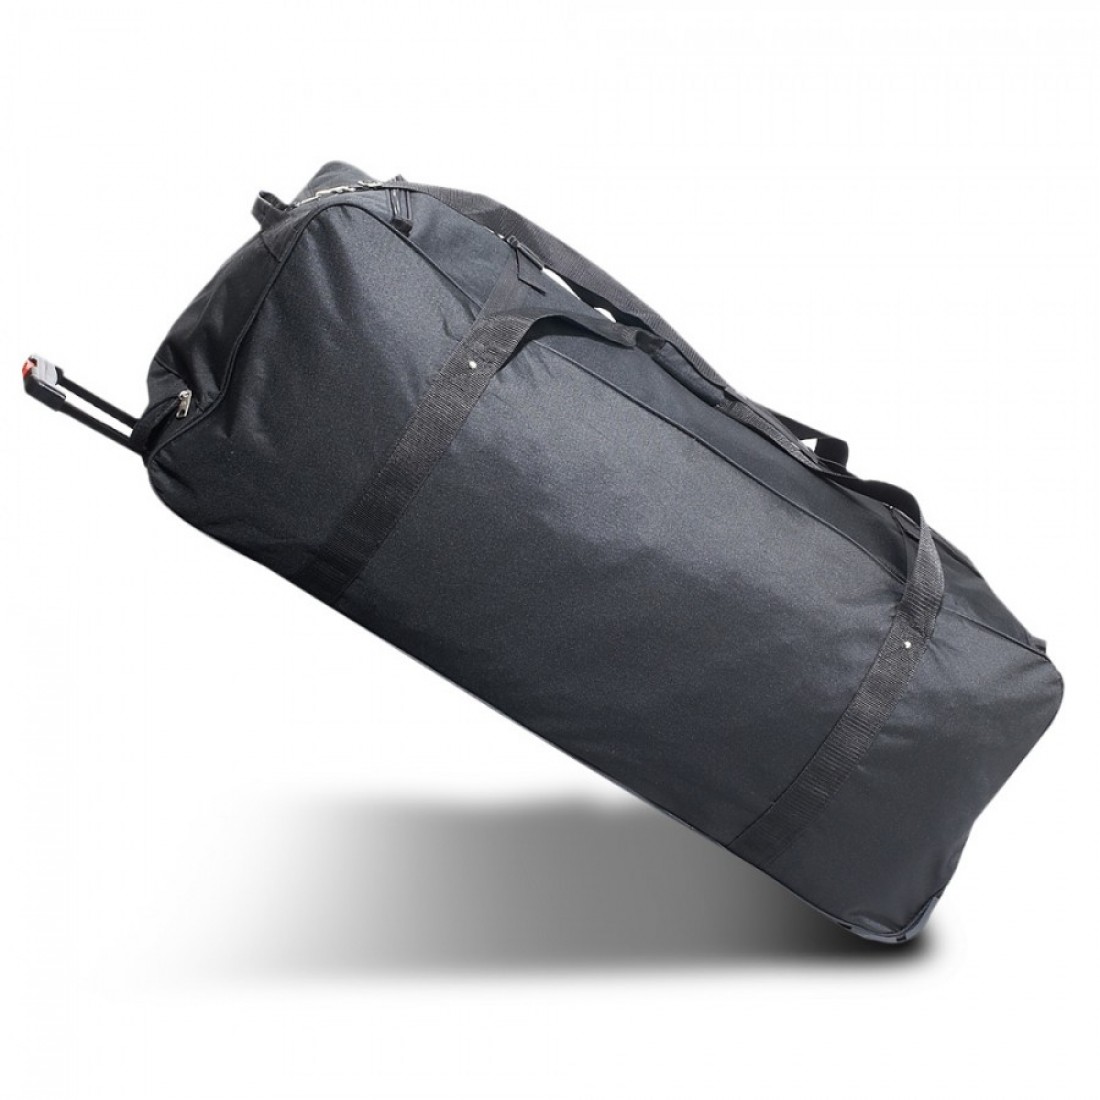 42-Inch Deluxe Duffel Bag| Wheeled Duffel | Duffelbags.com